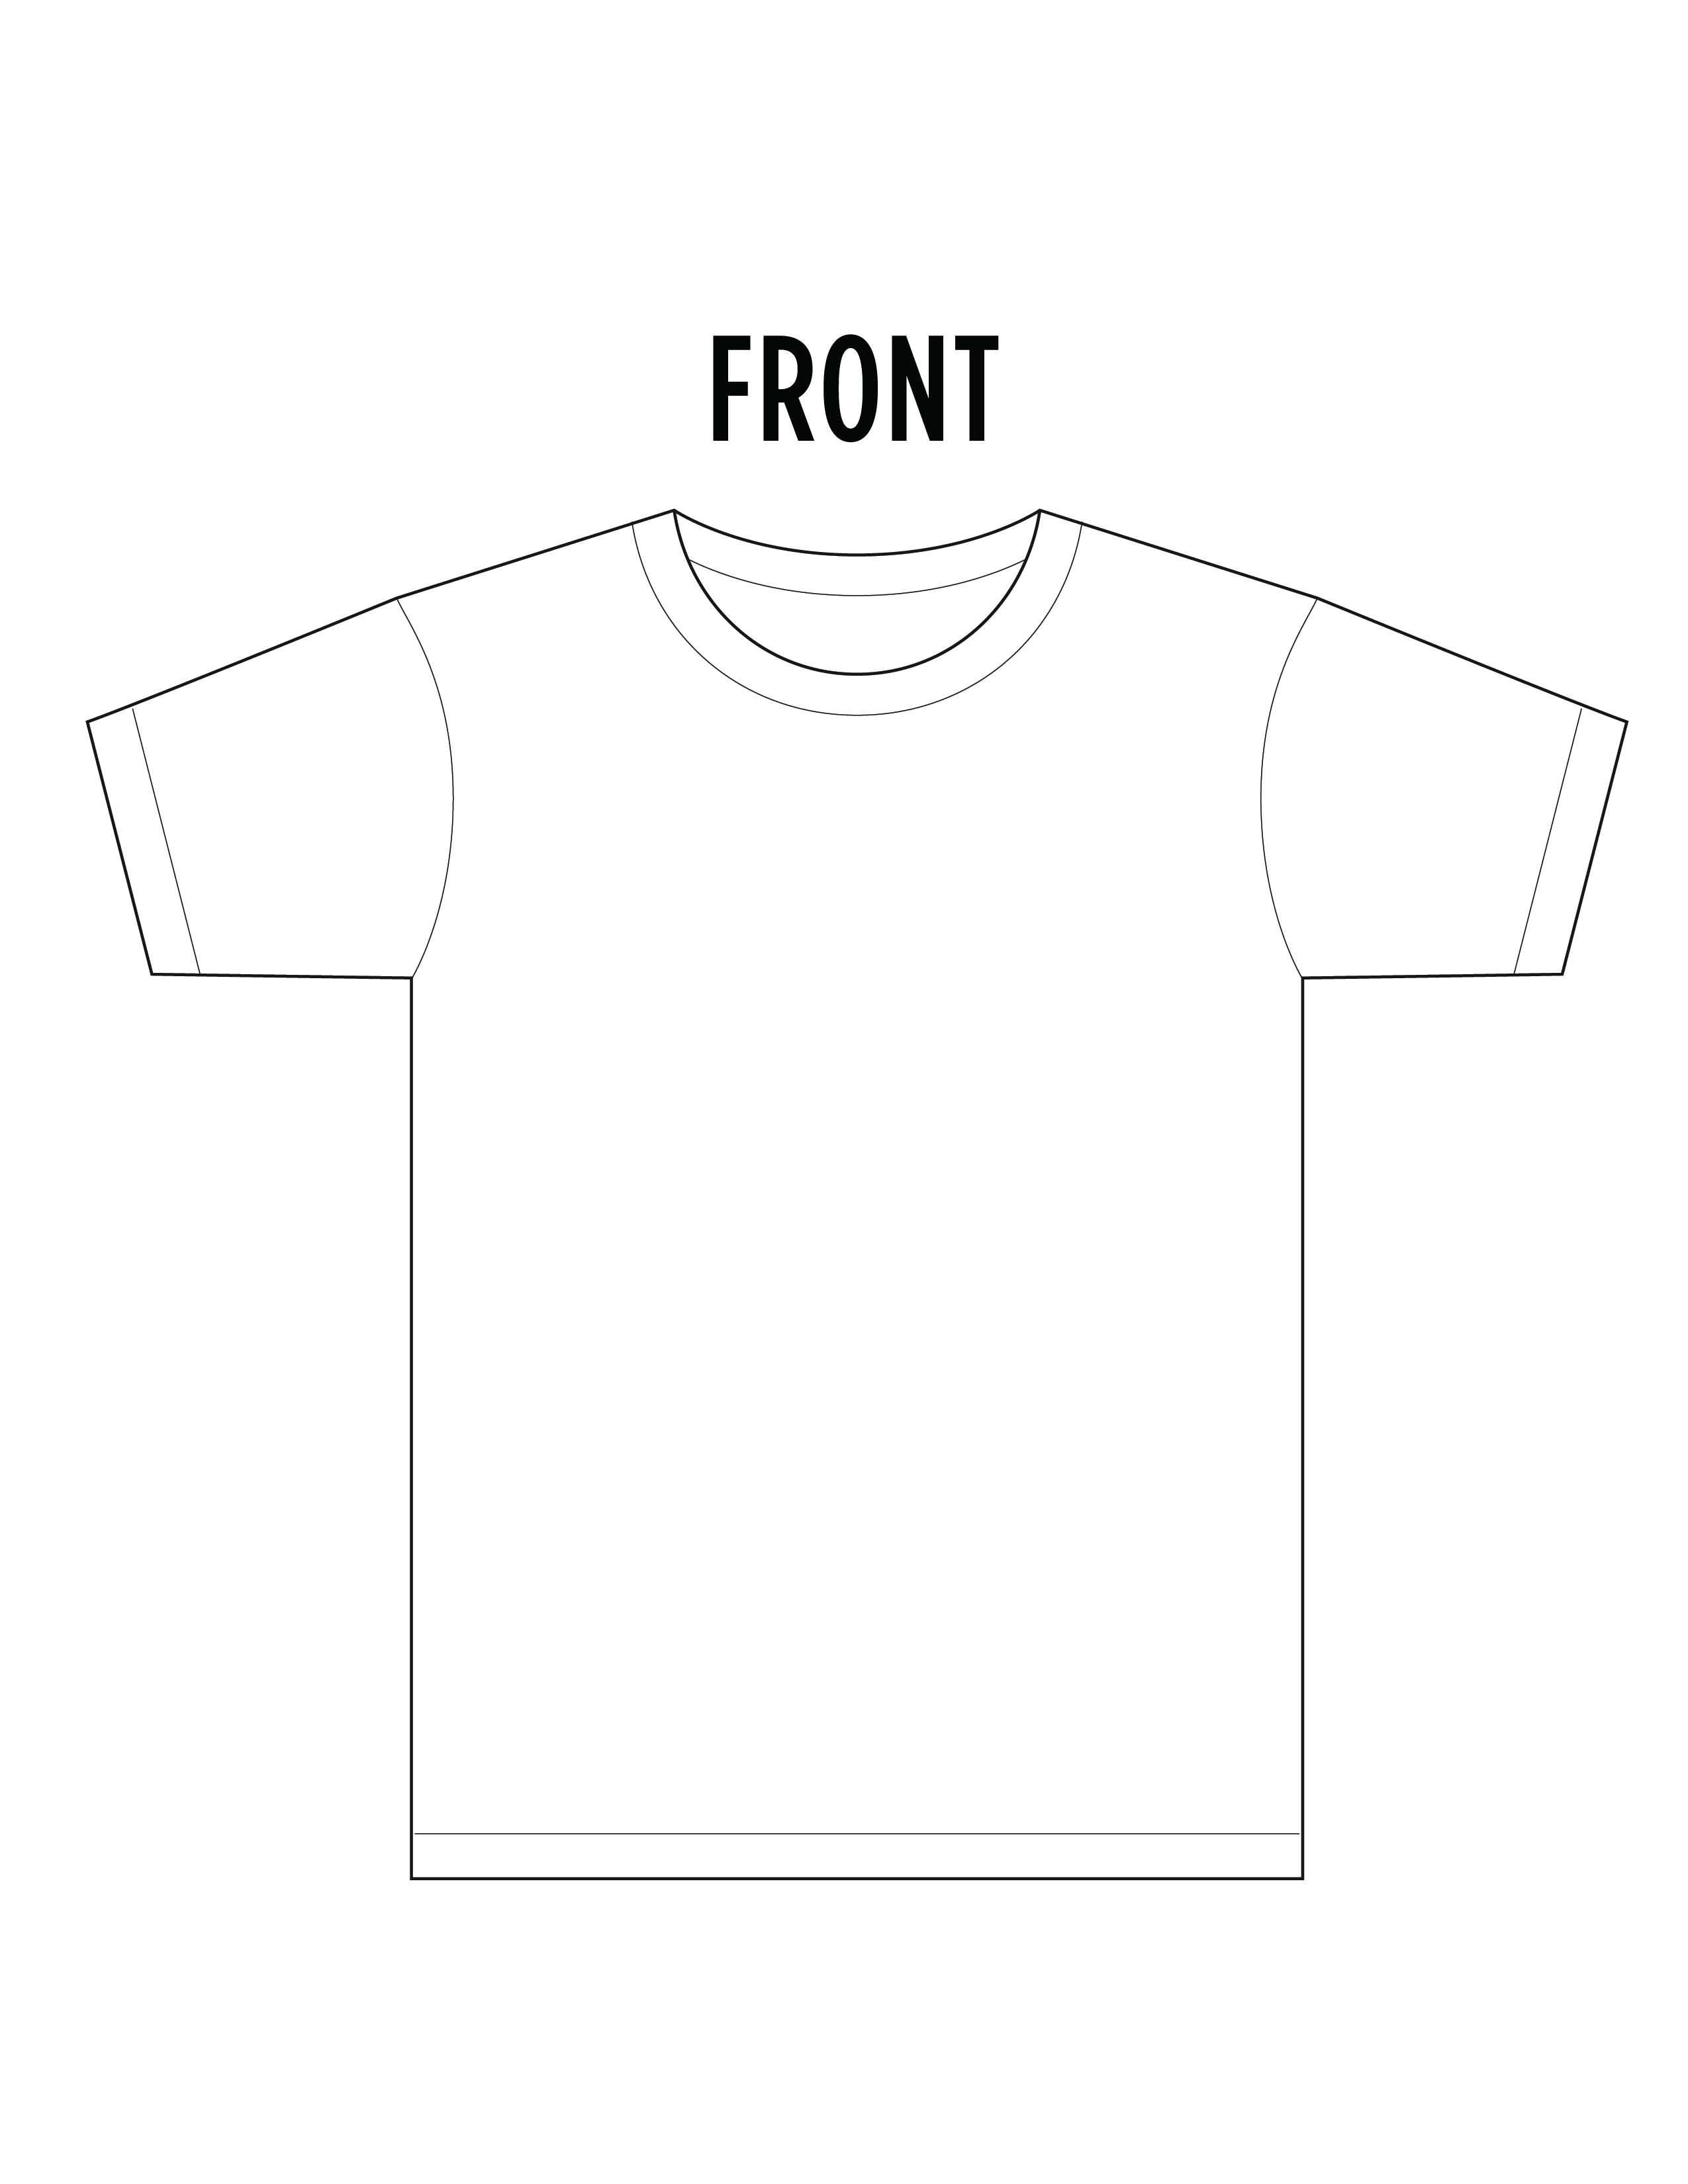 T-Shirt Template Back